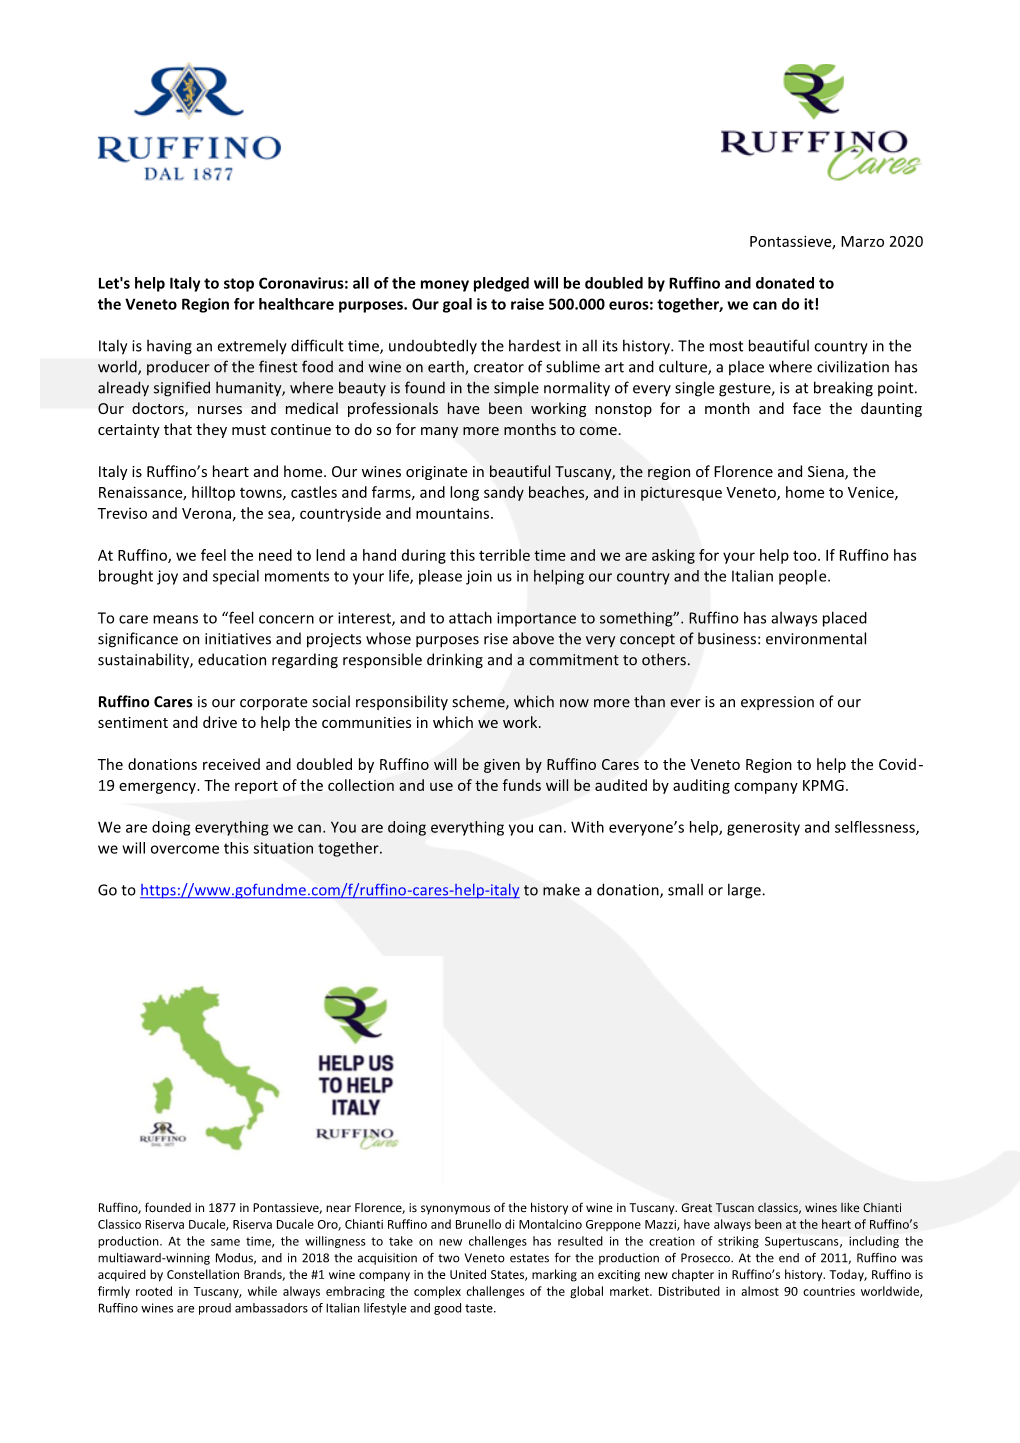 Pontassieve, Marzo 2020 Let's Help Italy to Stop Coronavirus: All of The